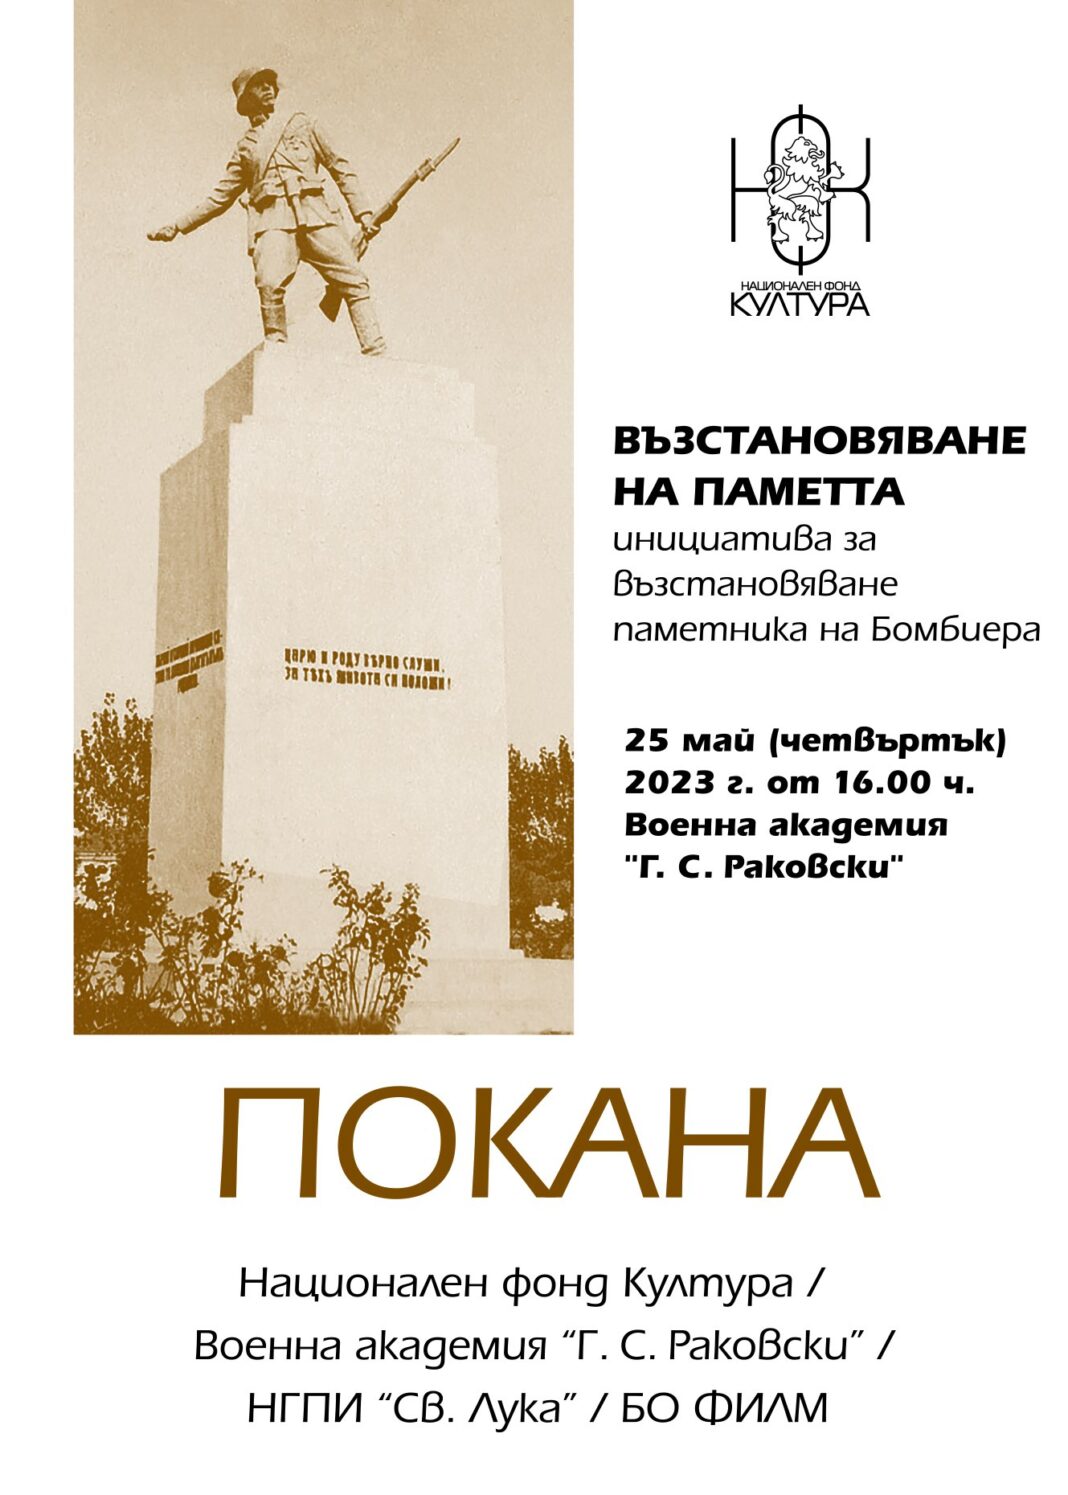 Bulgaria revolutionary G. S. Rakovski and production company Bo Film to begin Memory Restoration Project